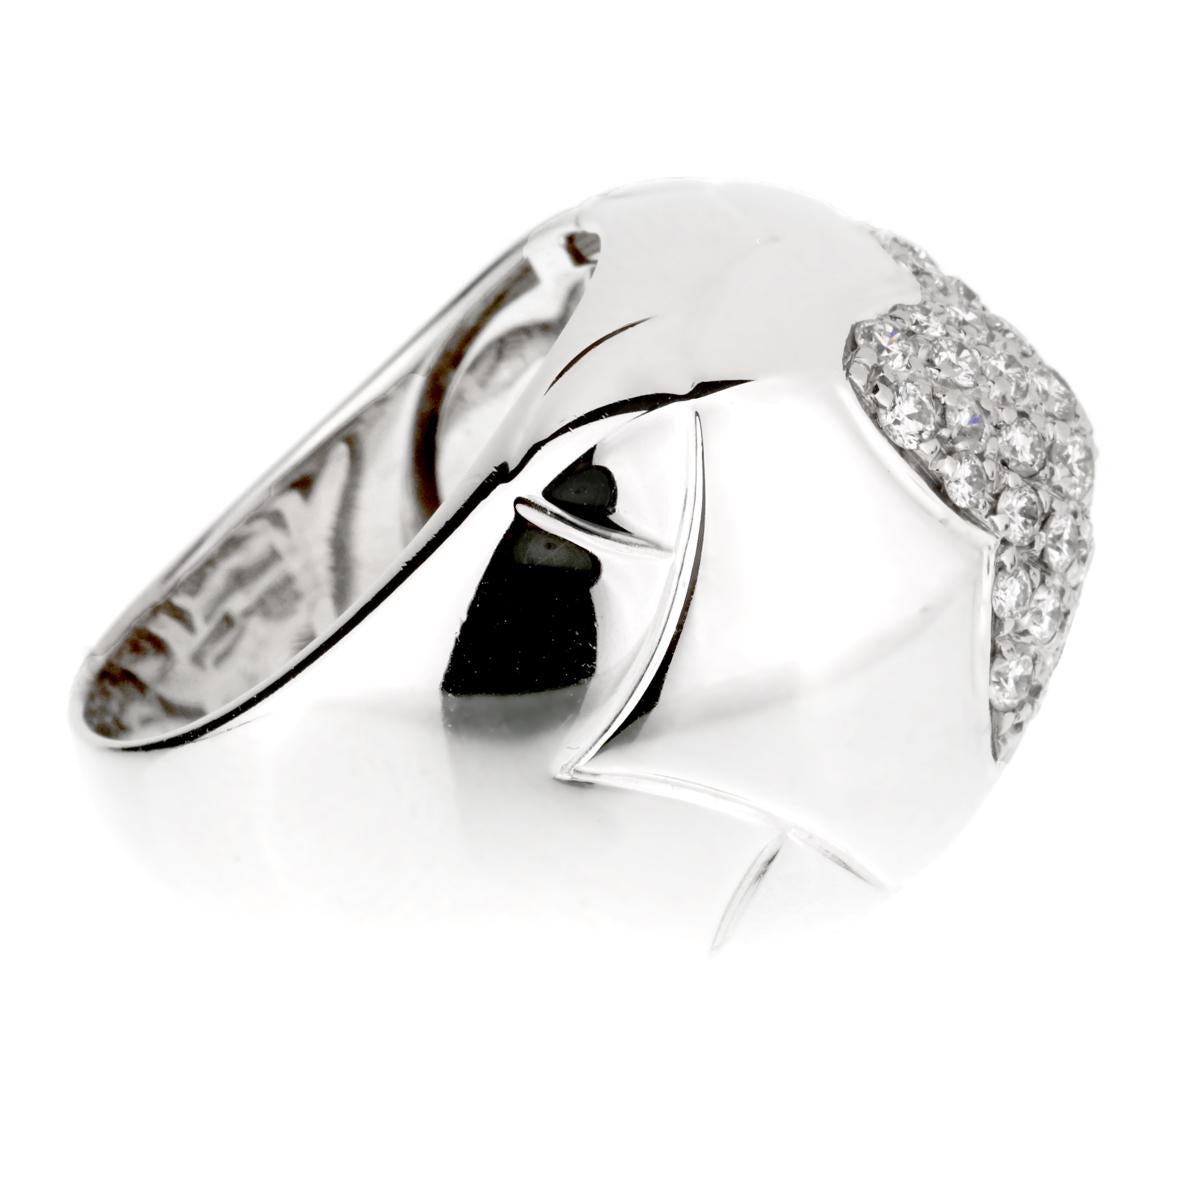 A chic authentic Bulgari diamond ring featuring the finest Bulgari round brilliant cut diamonds set in 18k white gold.